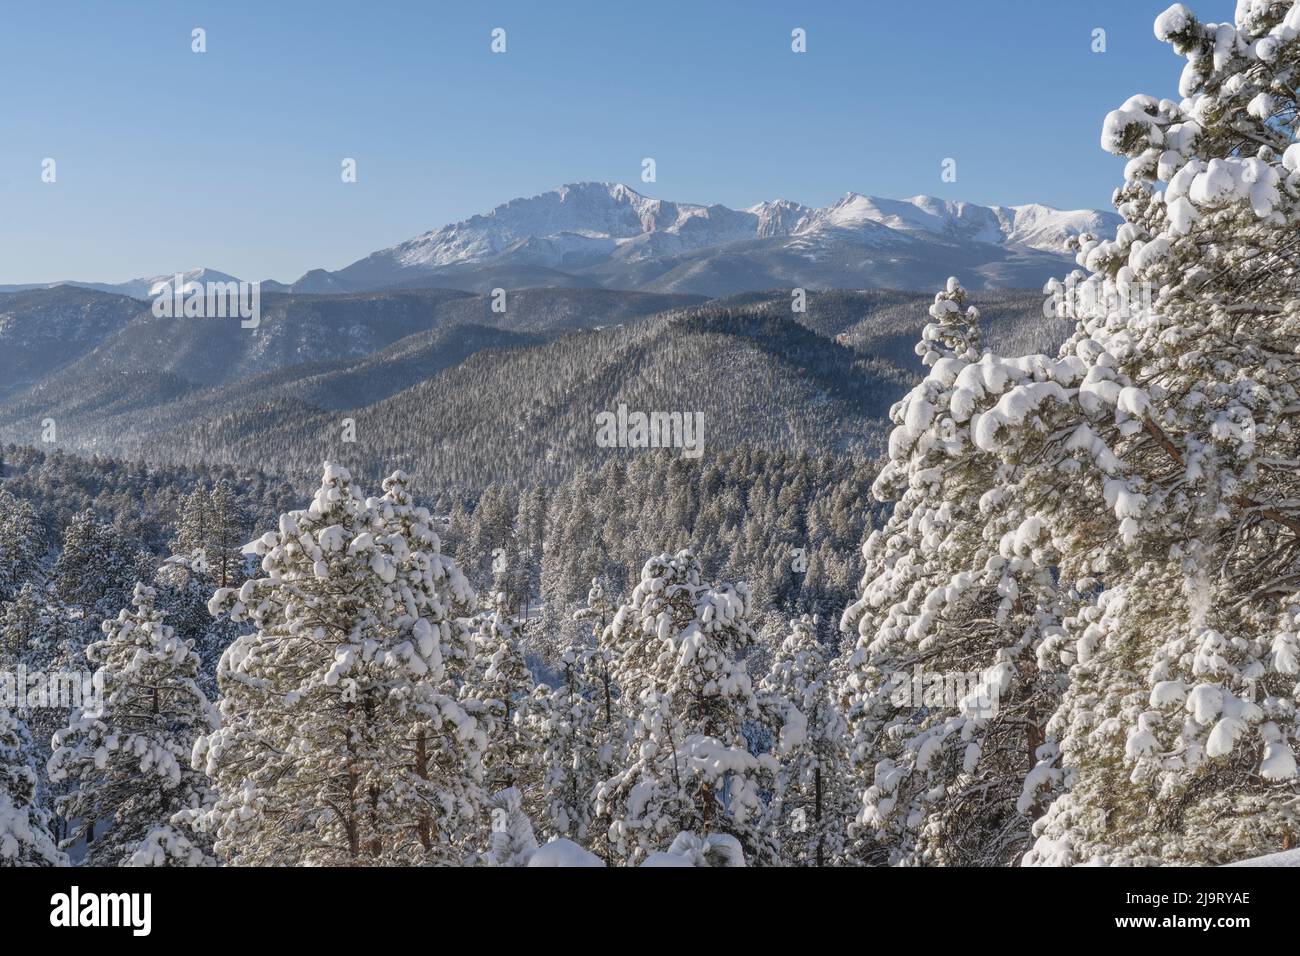 USA, Colorado, Pike National Forest. Pikes Peak lontano e nevicate di marzo sulle montagne. Foto Stock